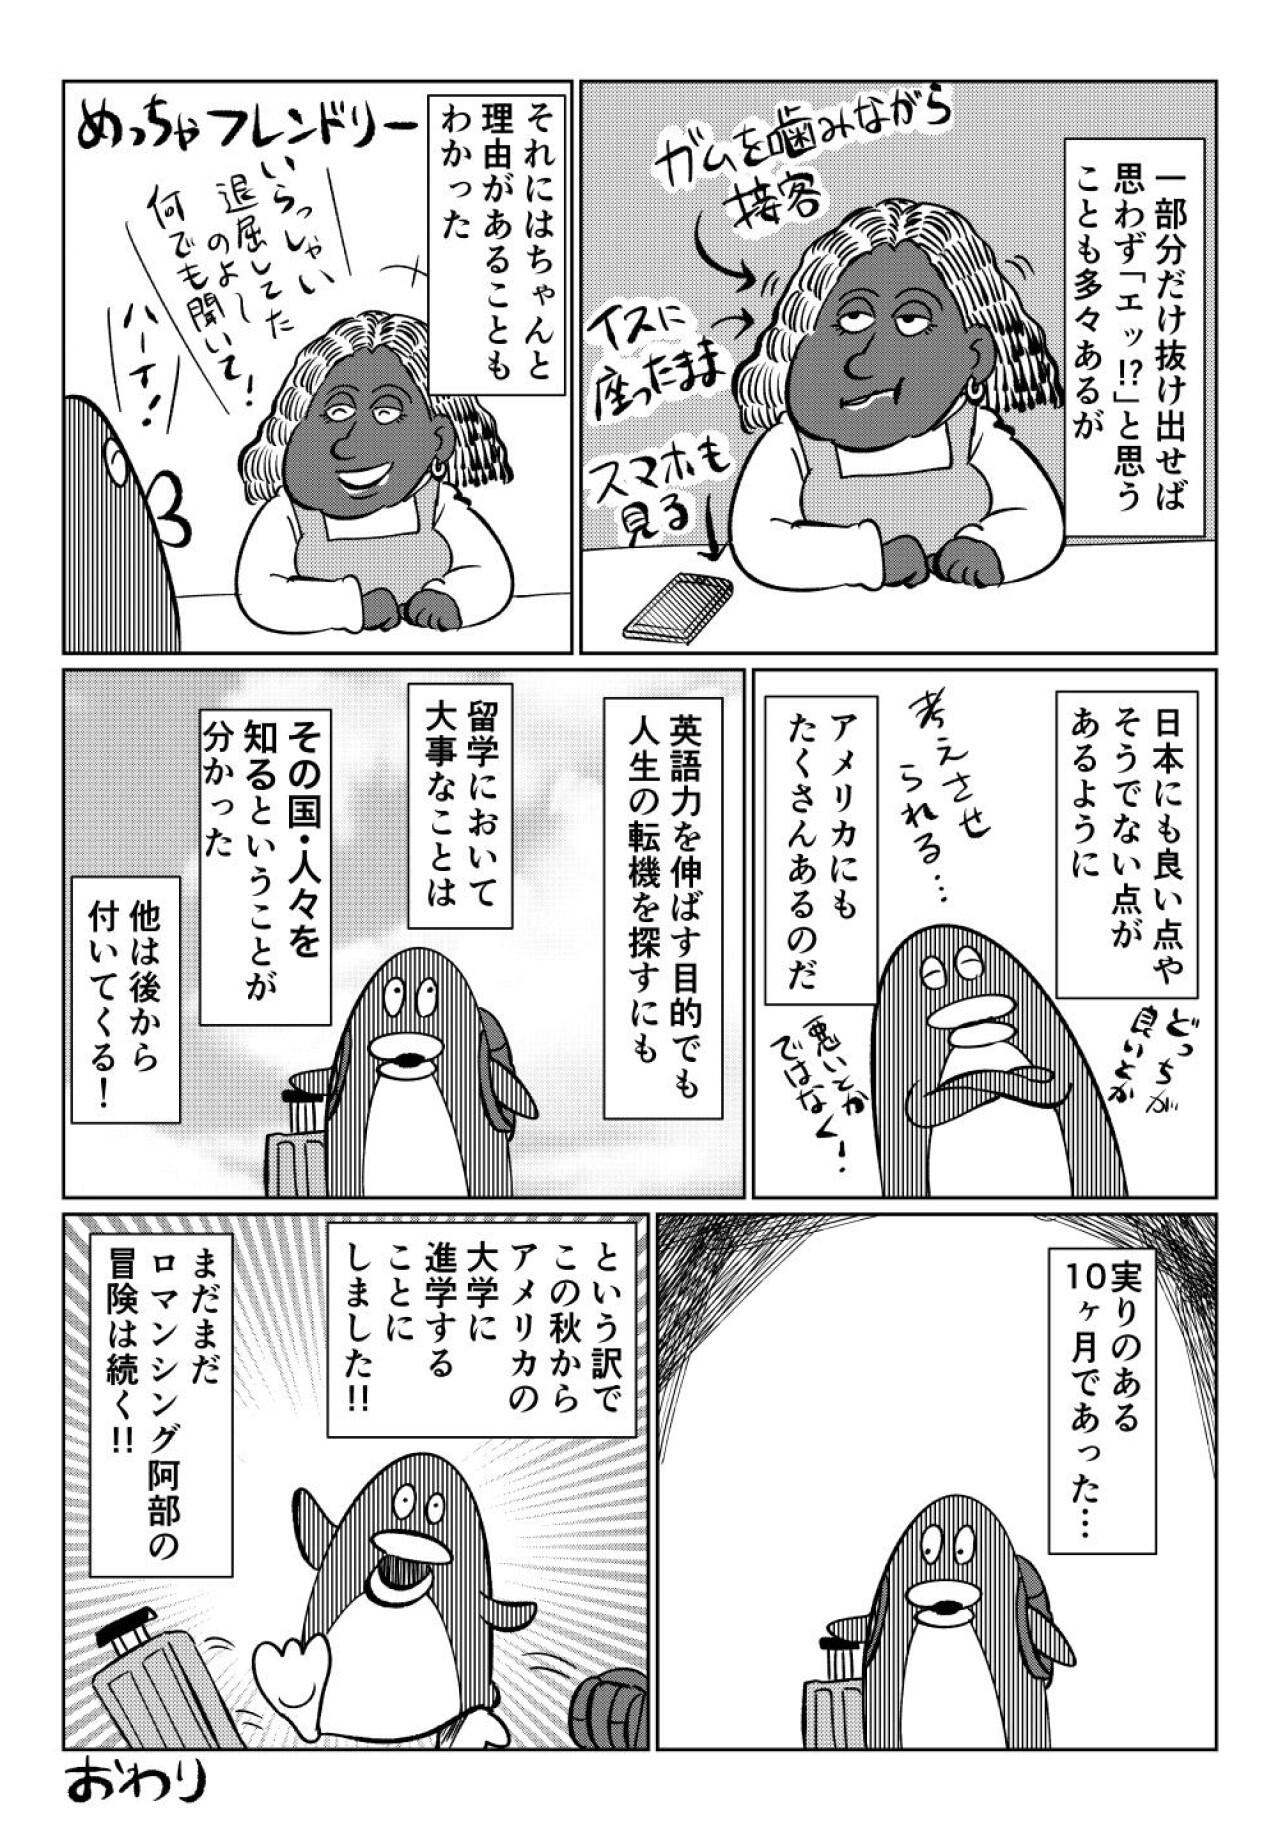 https://www.ryugaku.co.jp/column/images/34sai15_4_1280.jpg